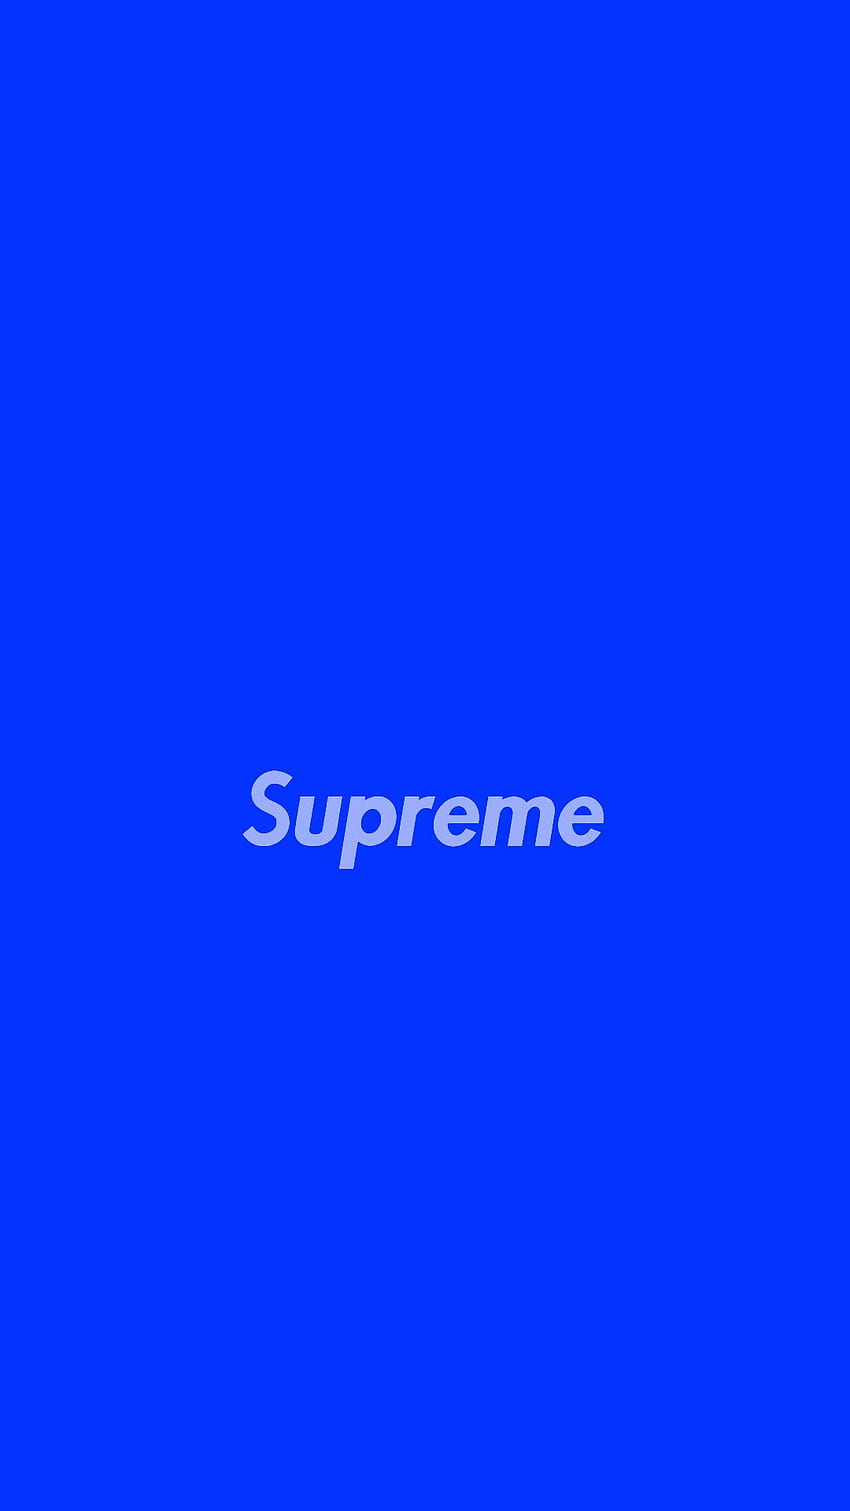 supreme x iOS 13 wallpaper  Black and blue wallpaper, Supreme iphone  wallpaper, Hypebeast iphone wallpaper